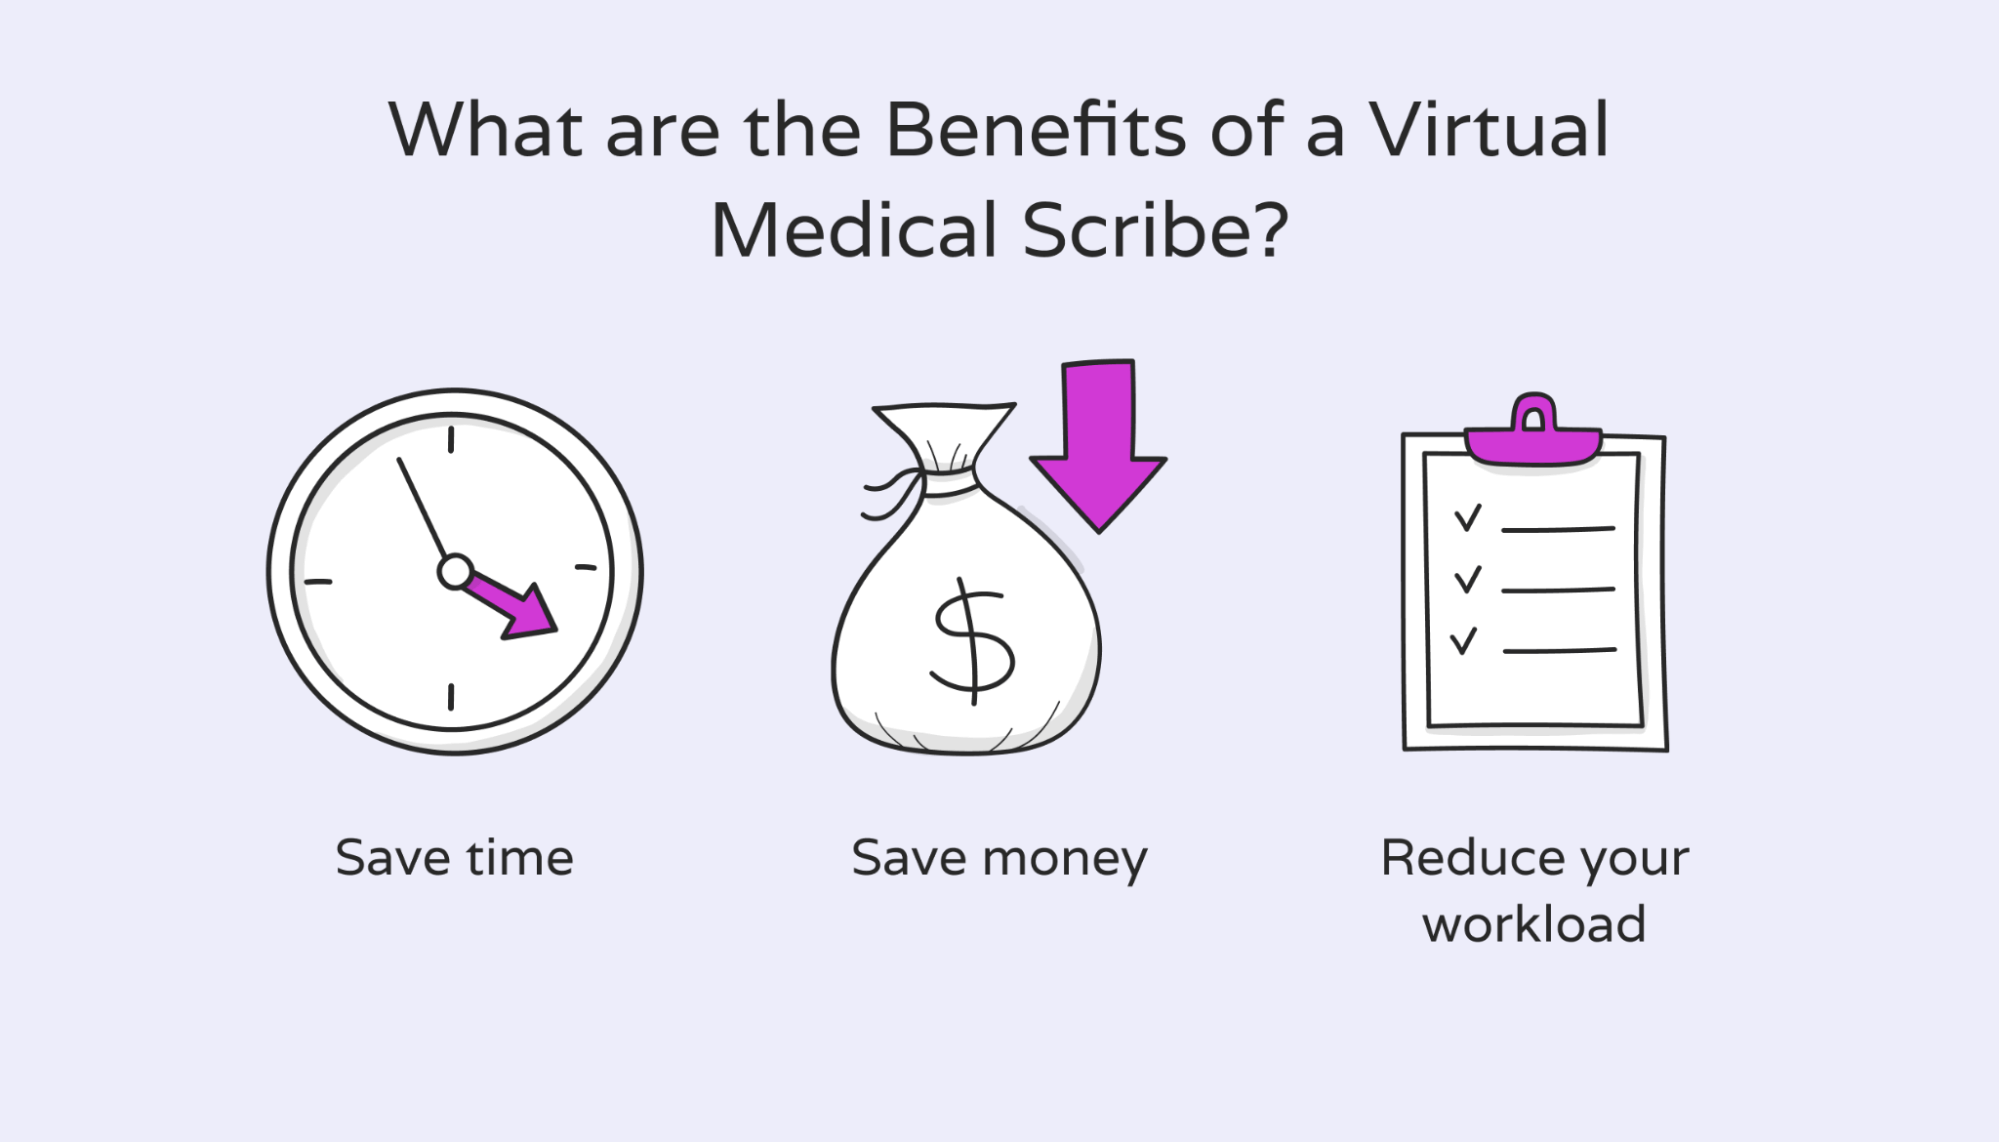 Benefits of a virtual medical scribe